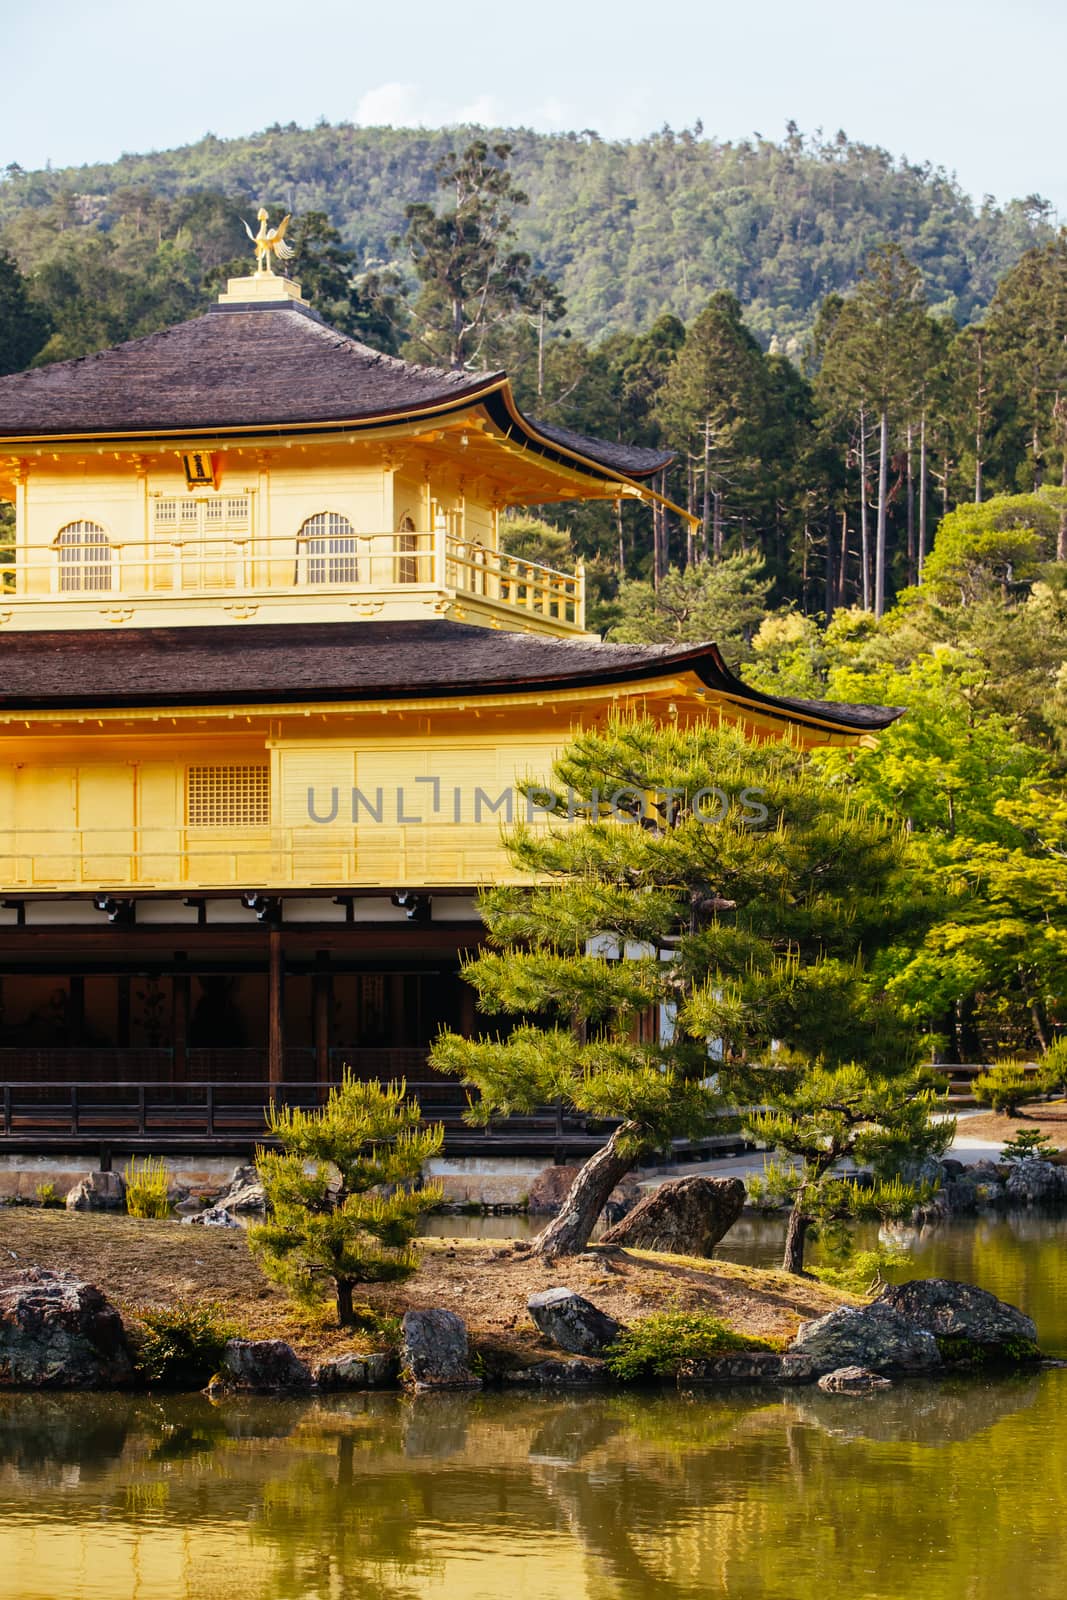 Kinkakuji Temple or The Golden Pavilion in Kyoto, Japan by FiledIMAGE